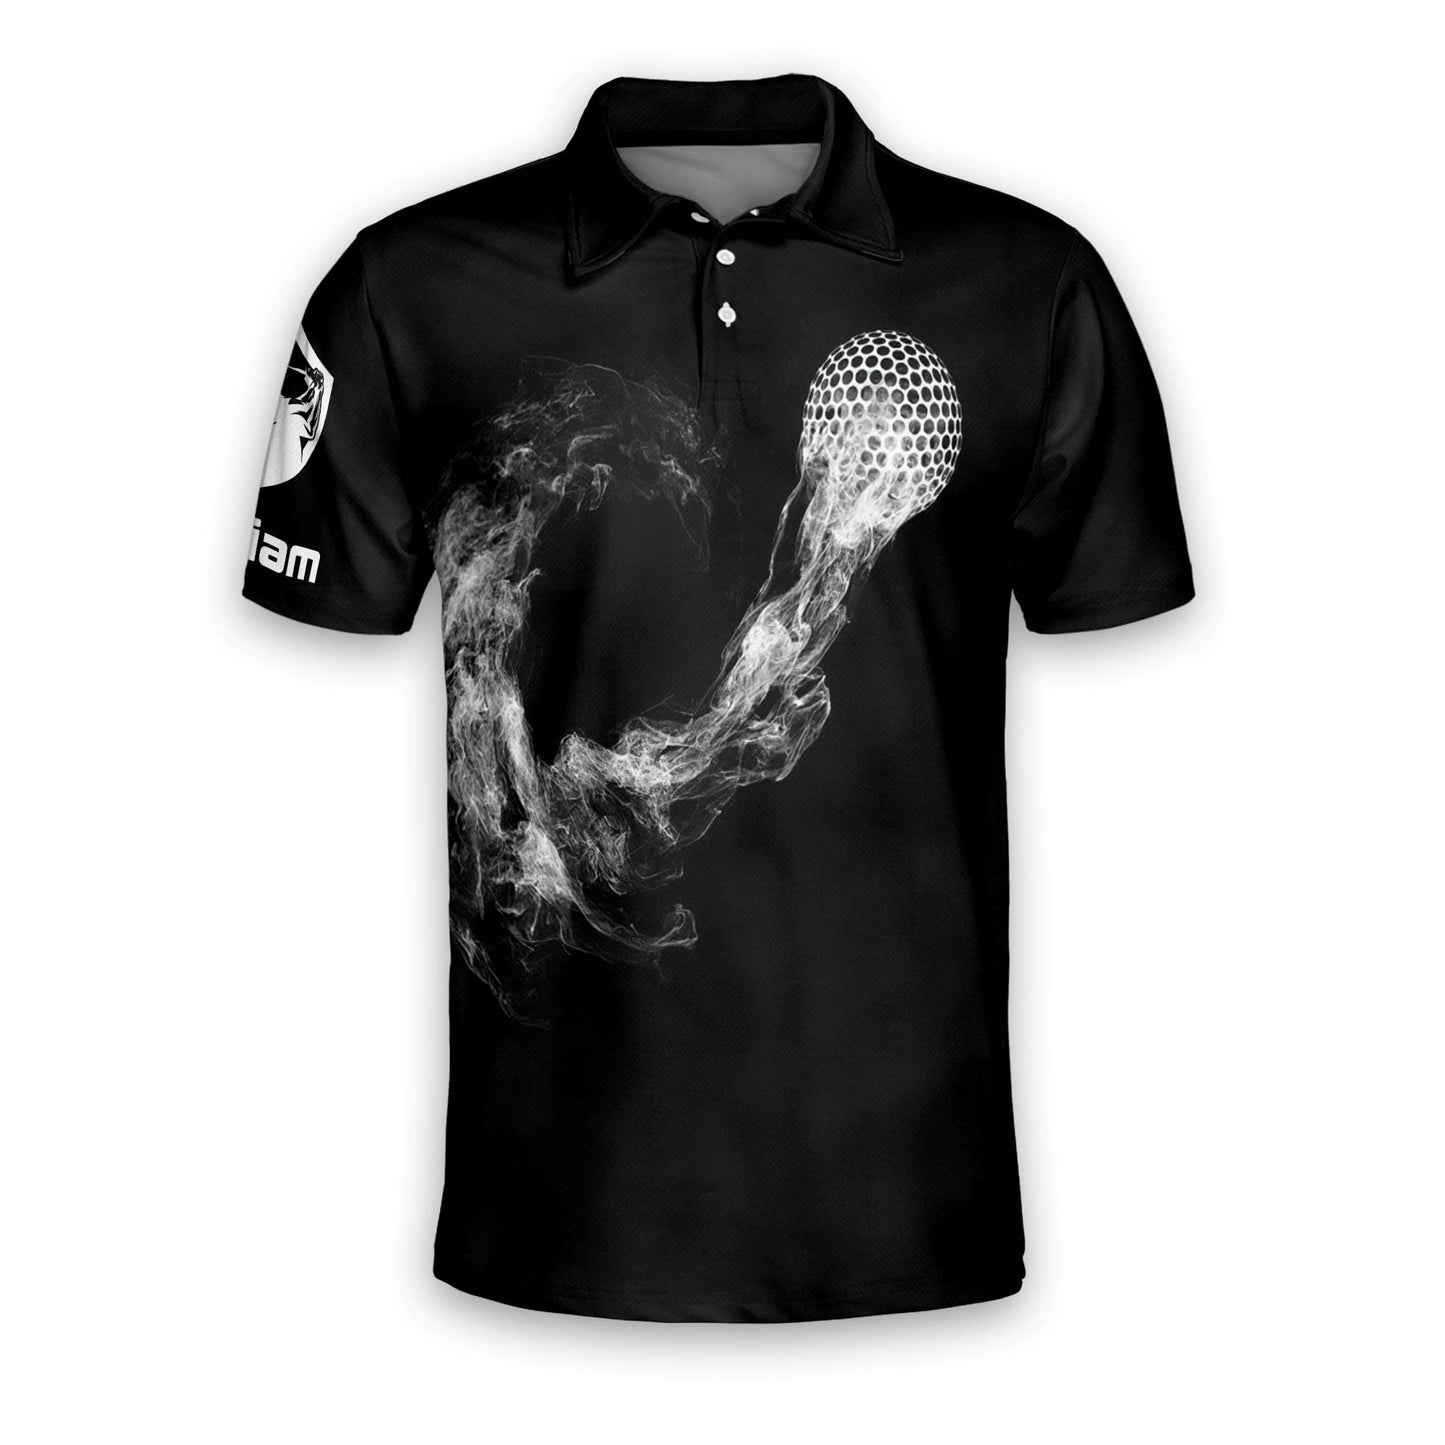 World's Okayest Golfer Polo Shirt GM0125